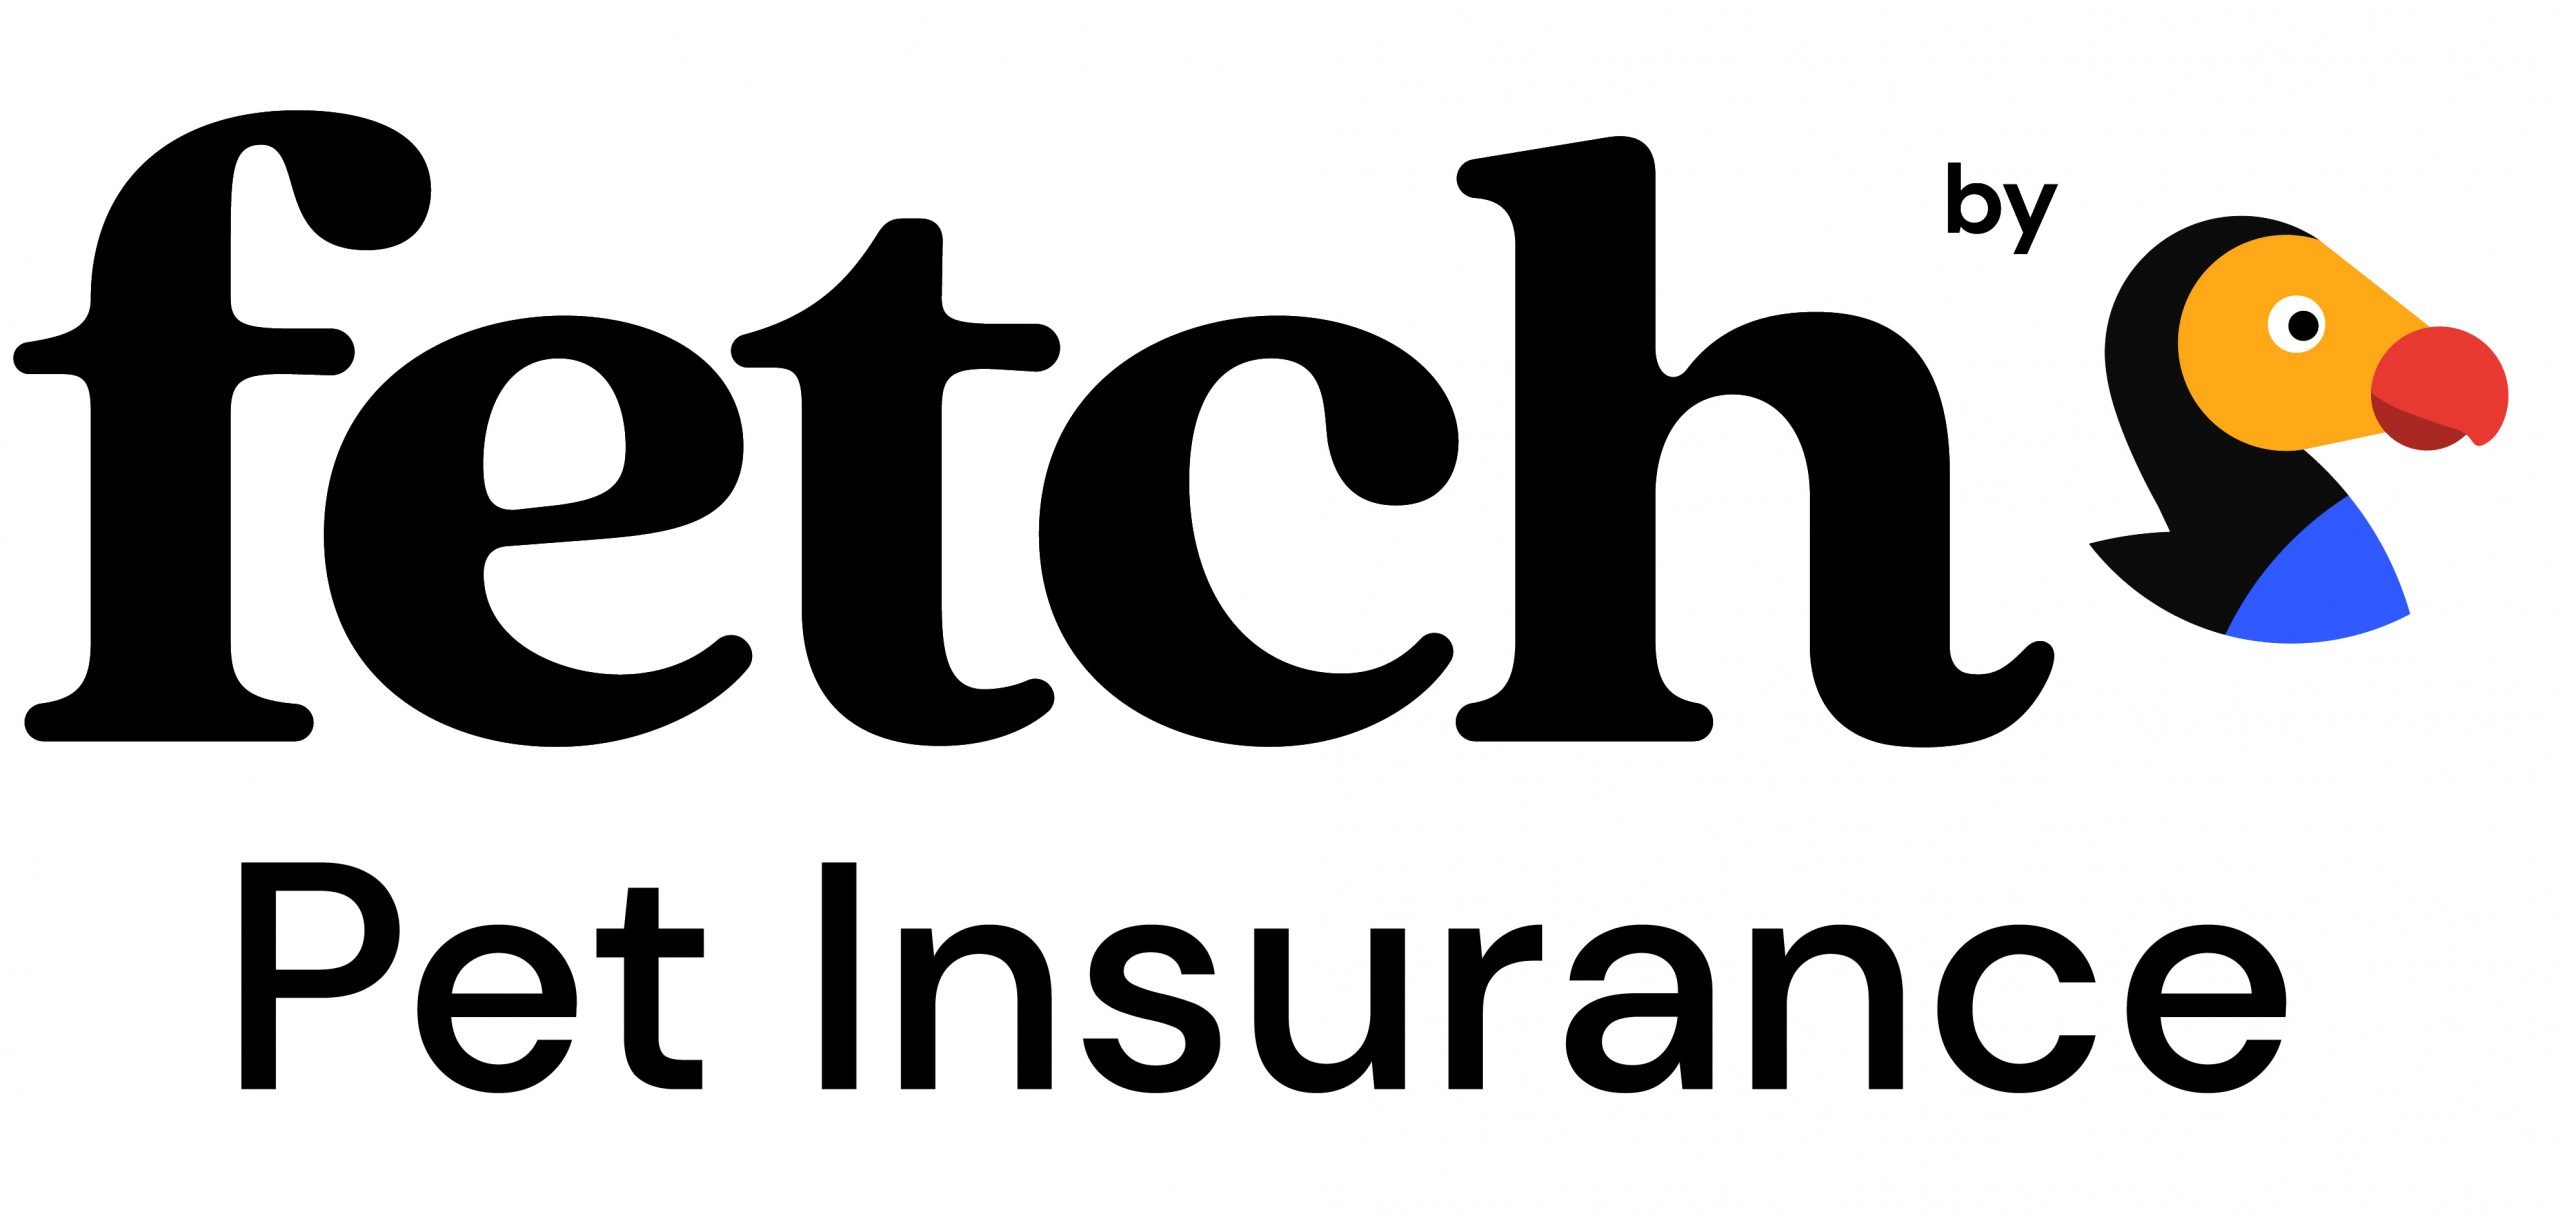 Fetch by The Dodo logo